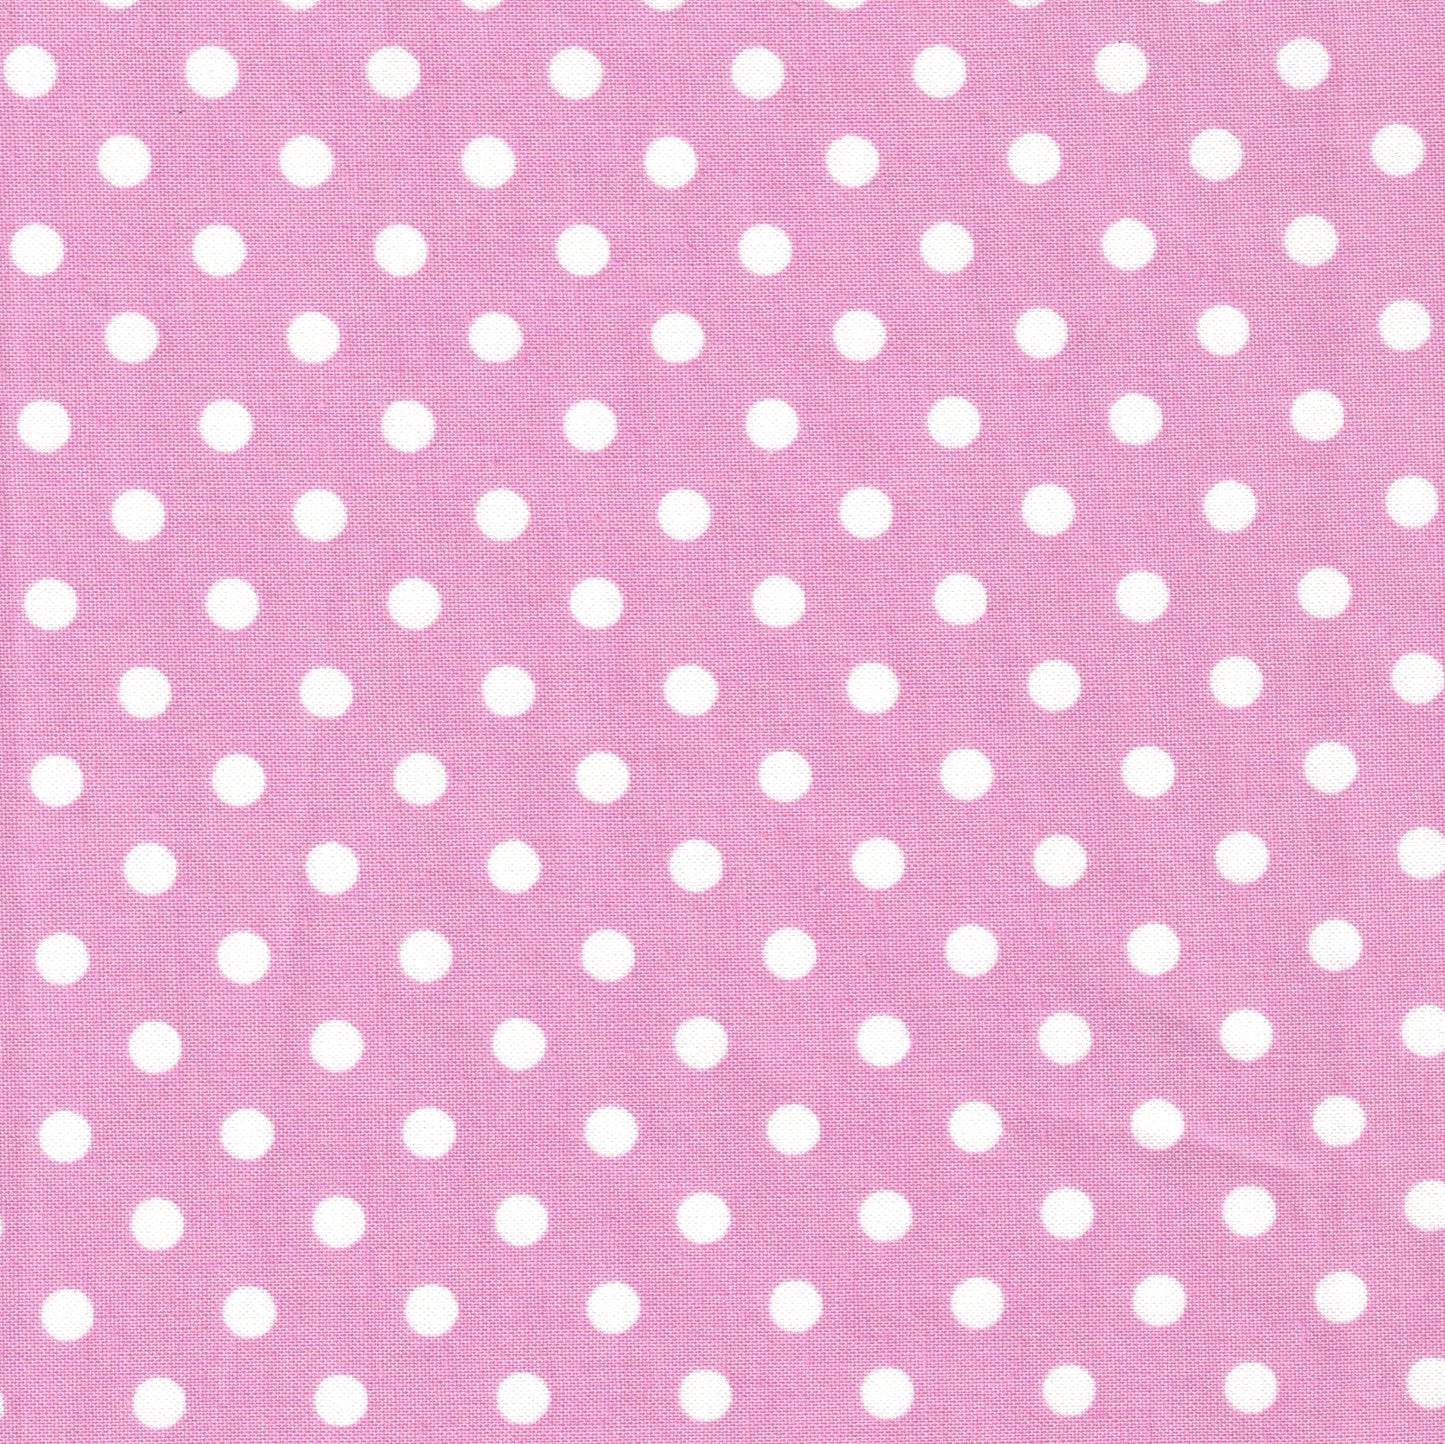 Basic: Polka Dot -- Pink